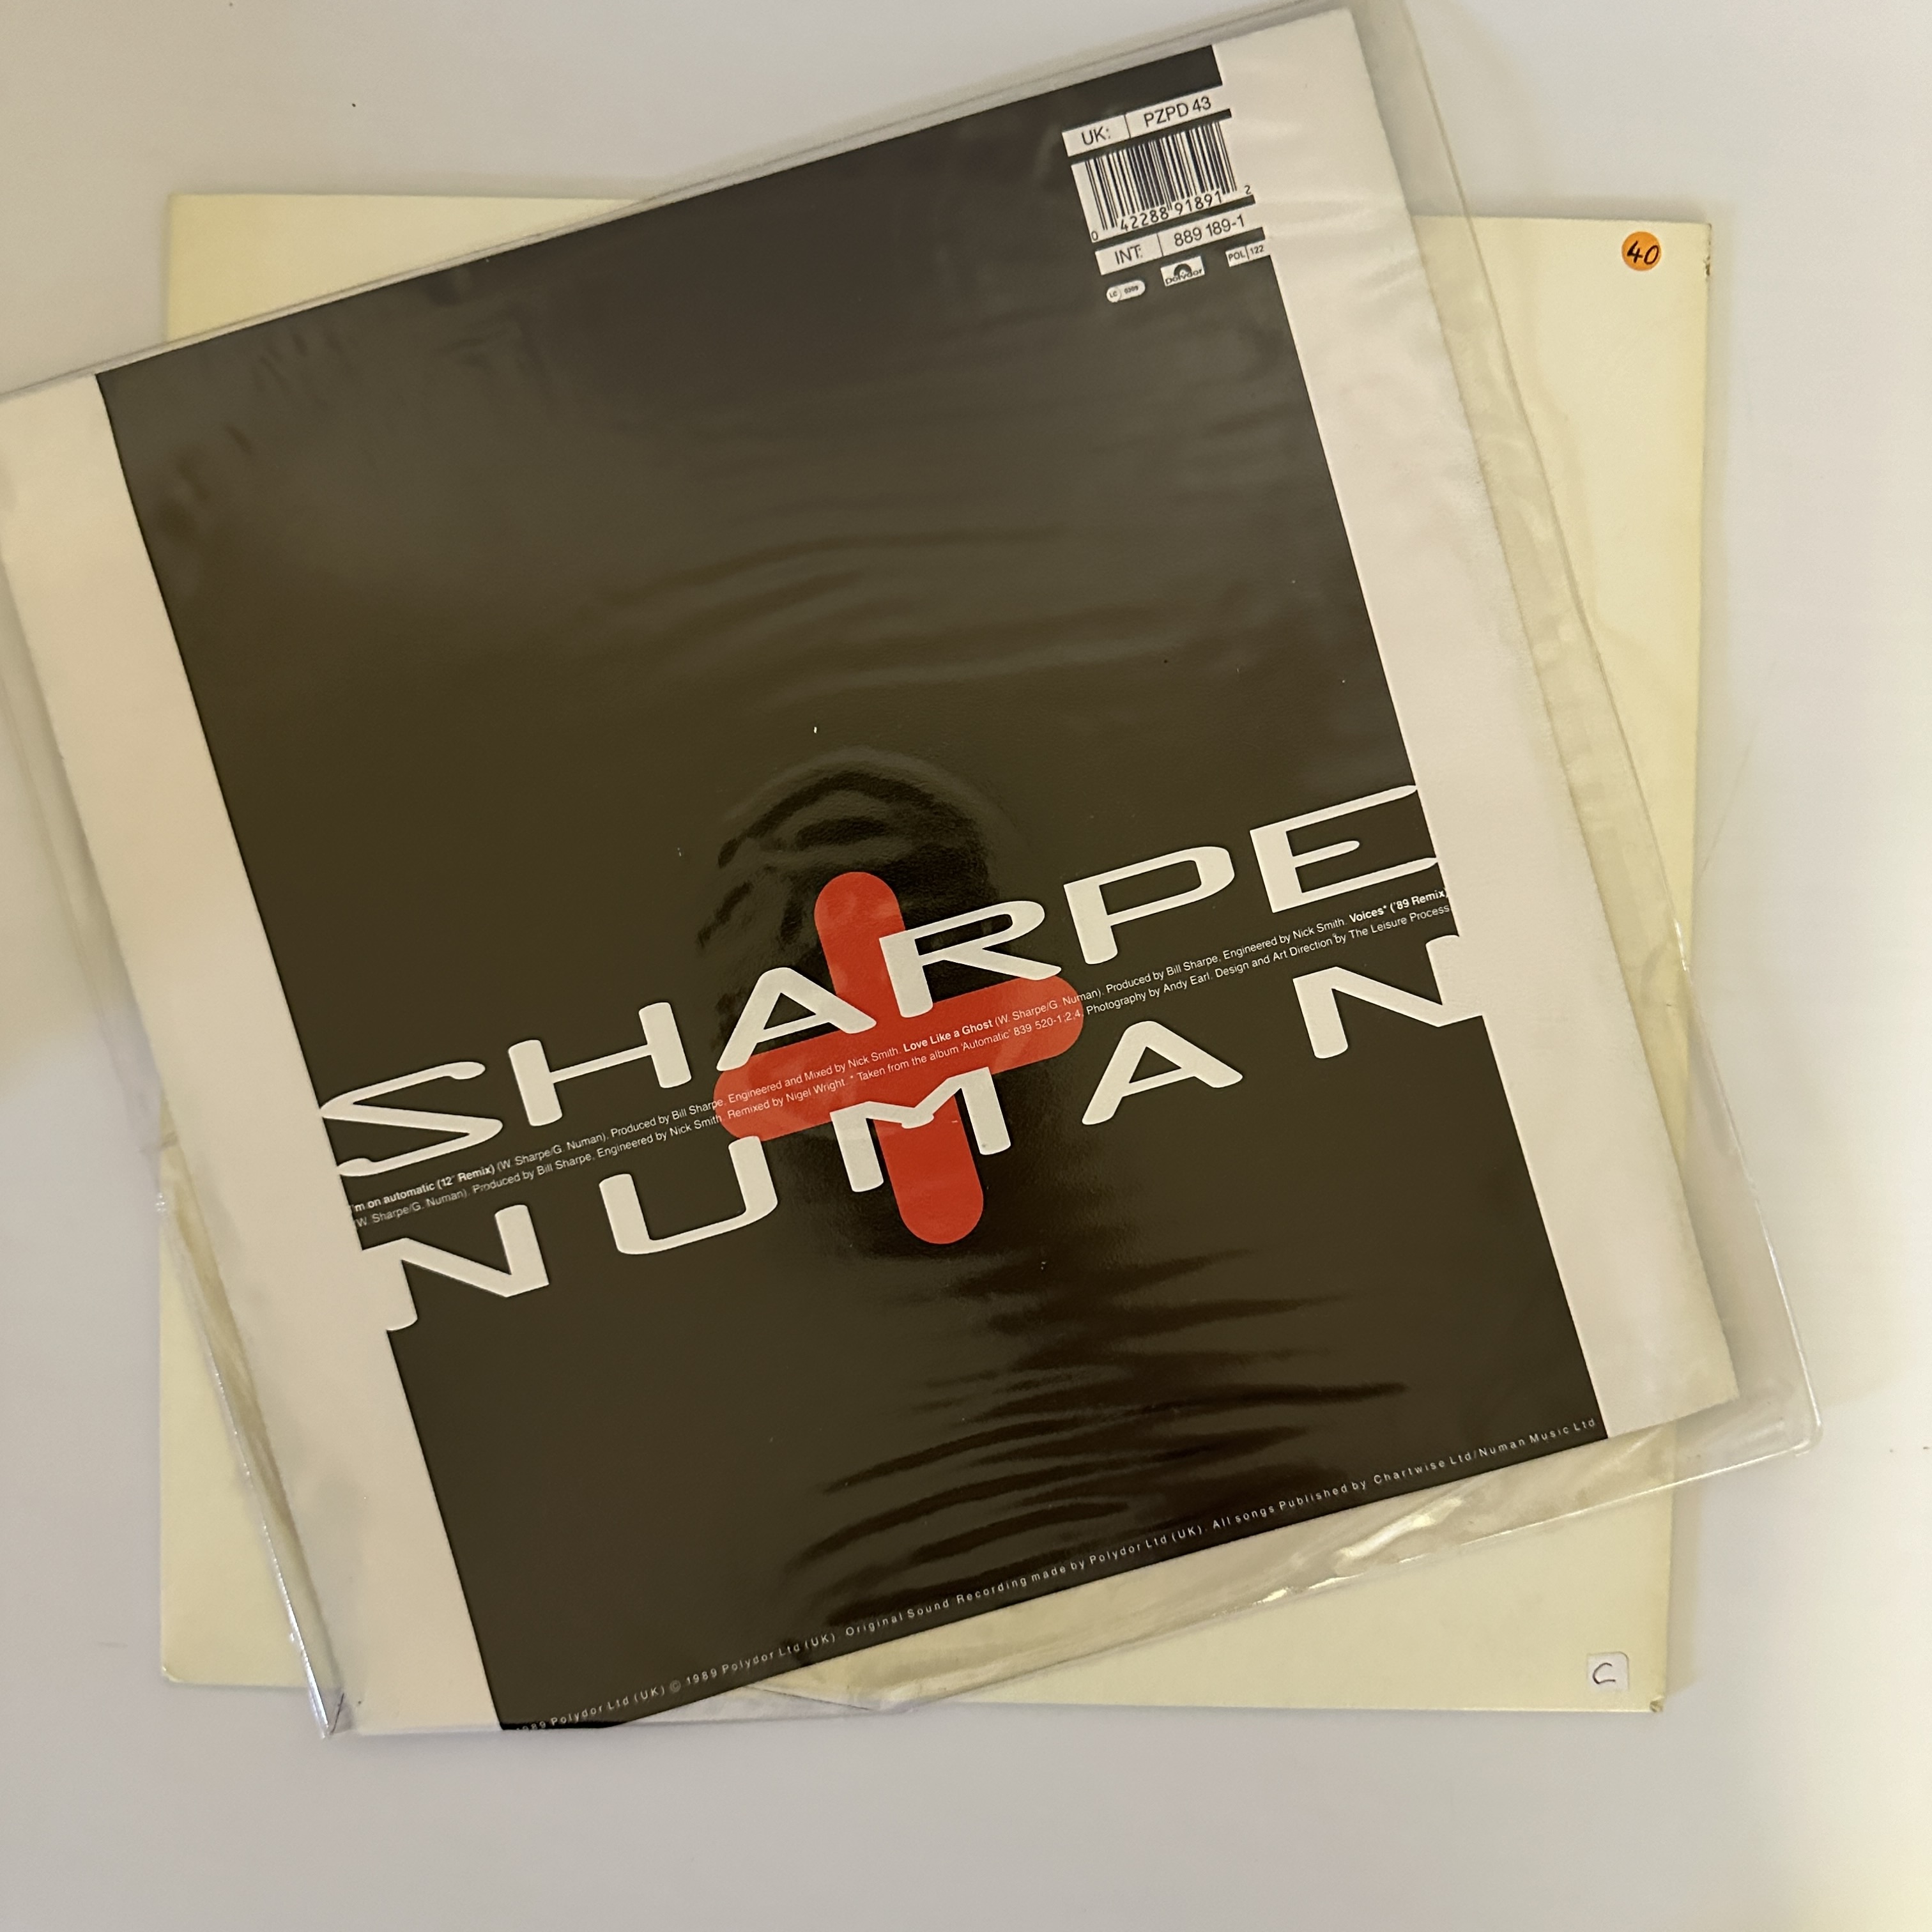 A Sharpe + Numan - I'm on automatic vinyl - Image 2 of 5